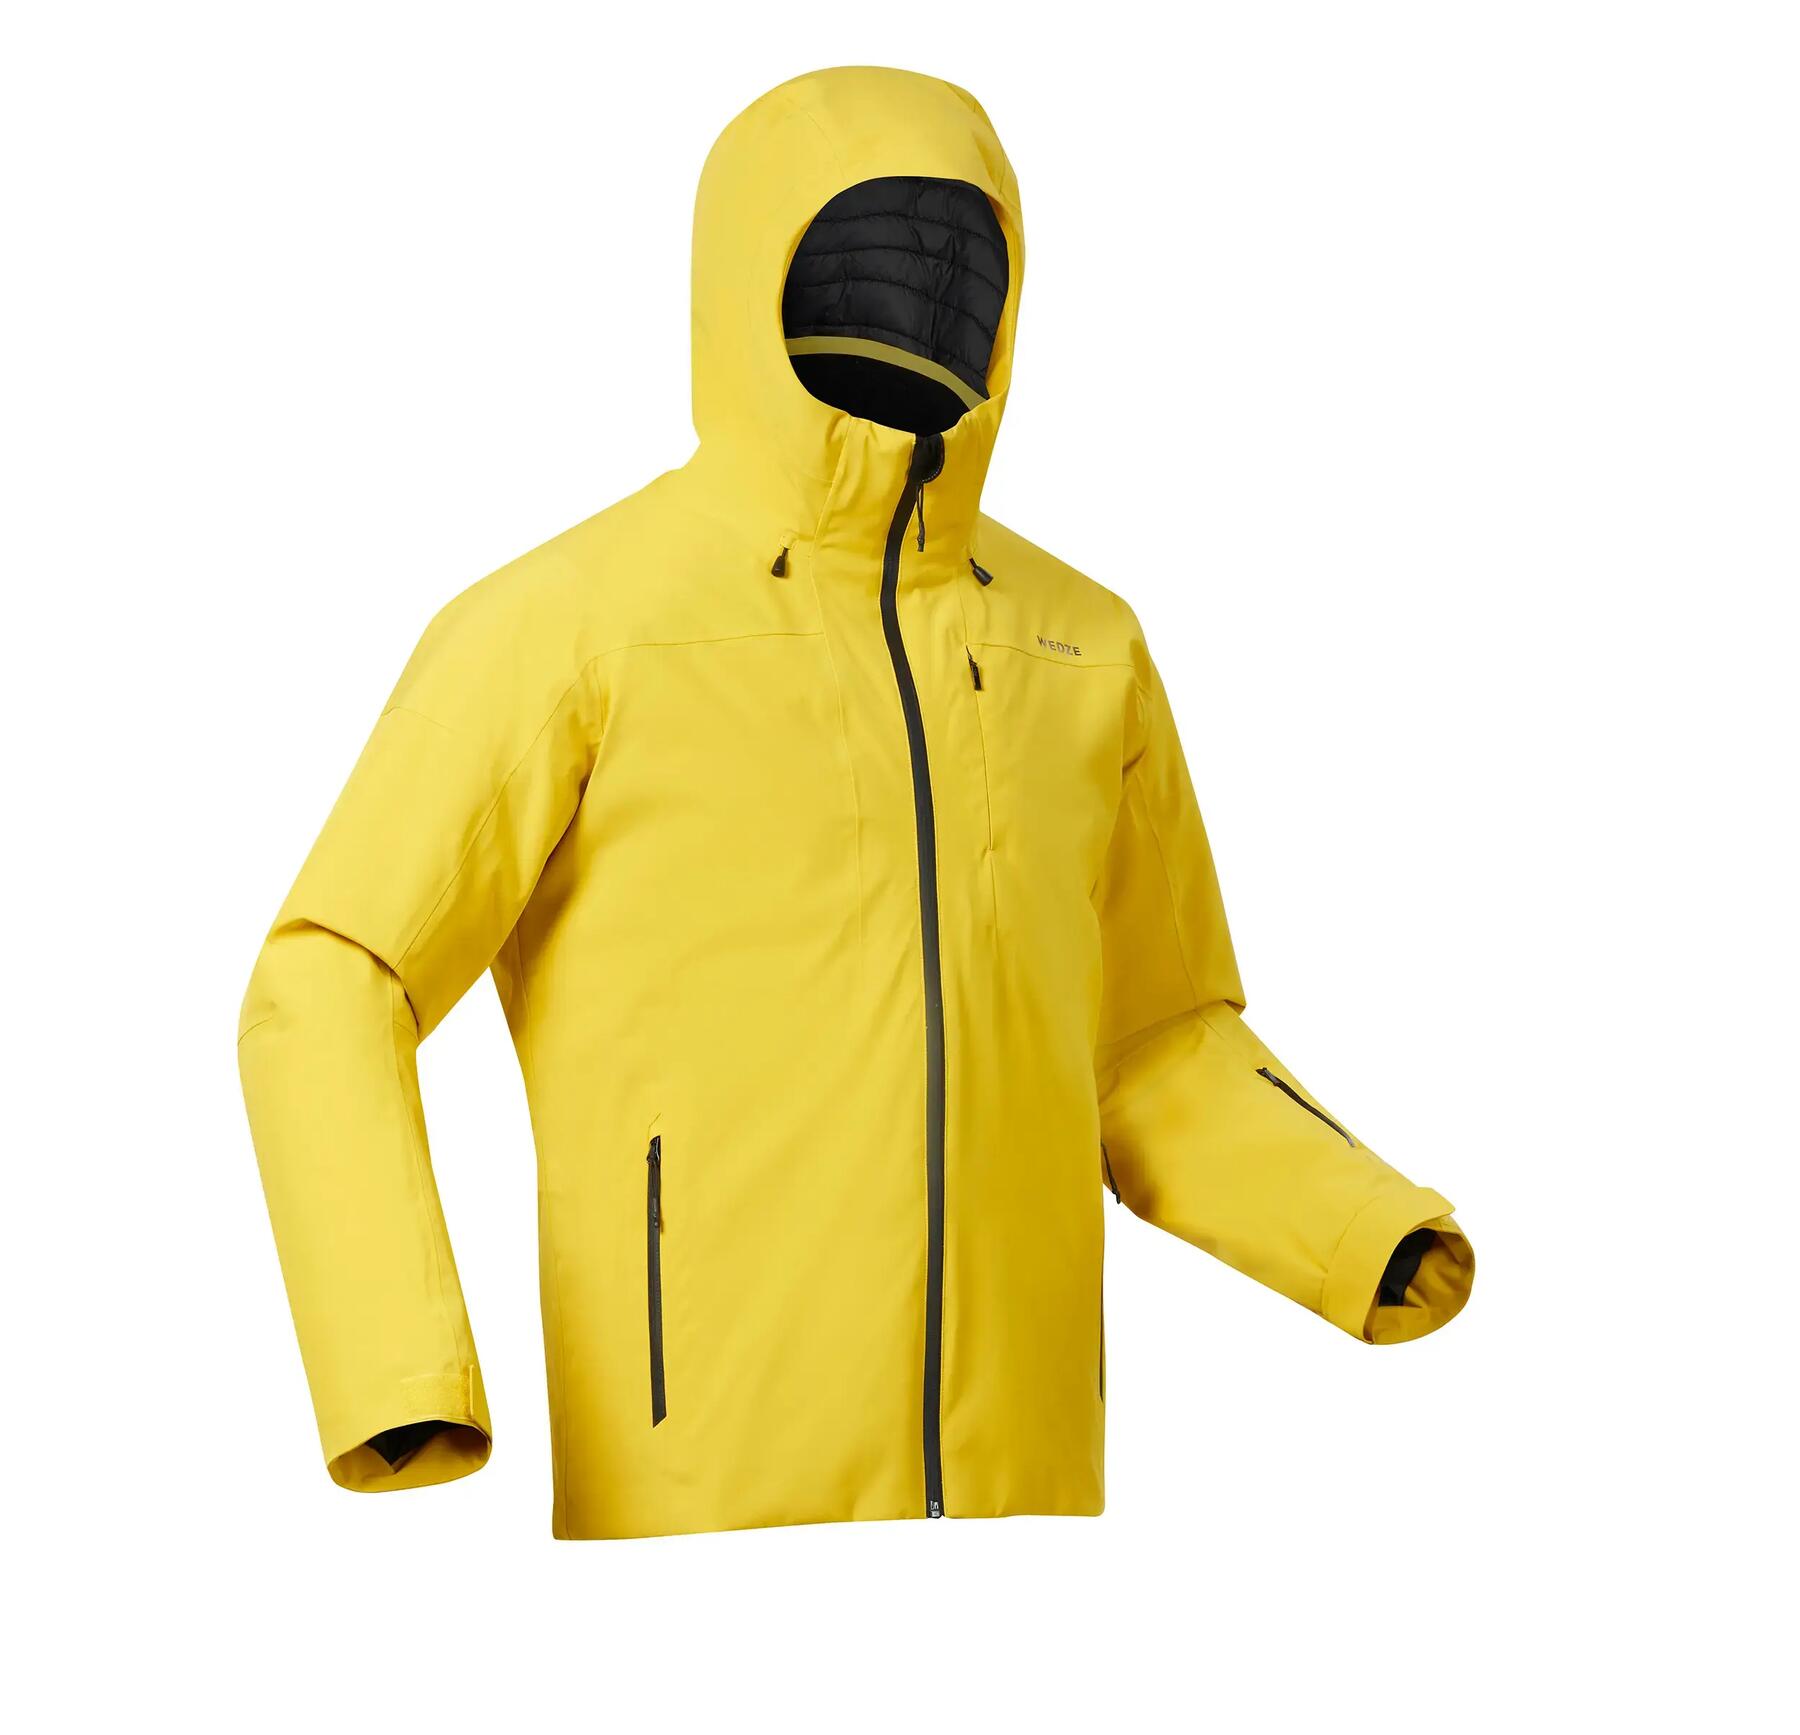 Find the Best Warm Waterproof Jackets this Winter